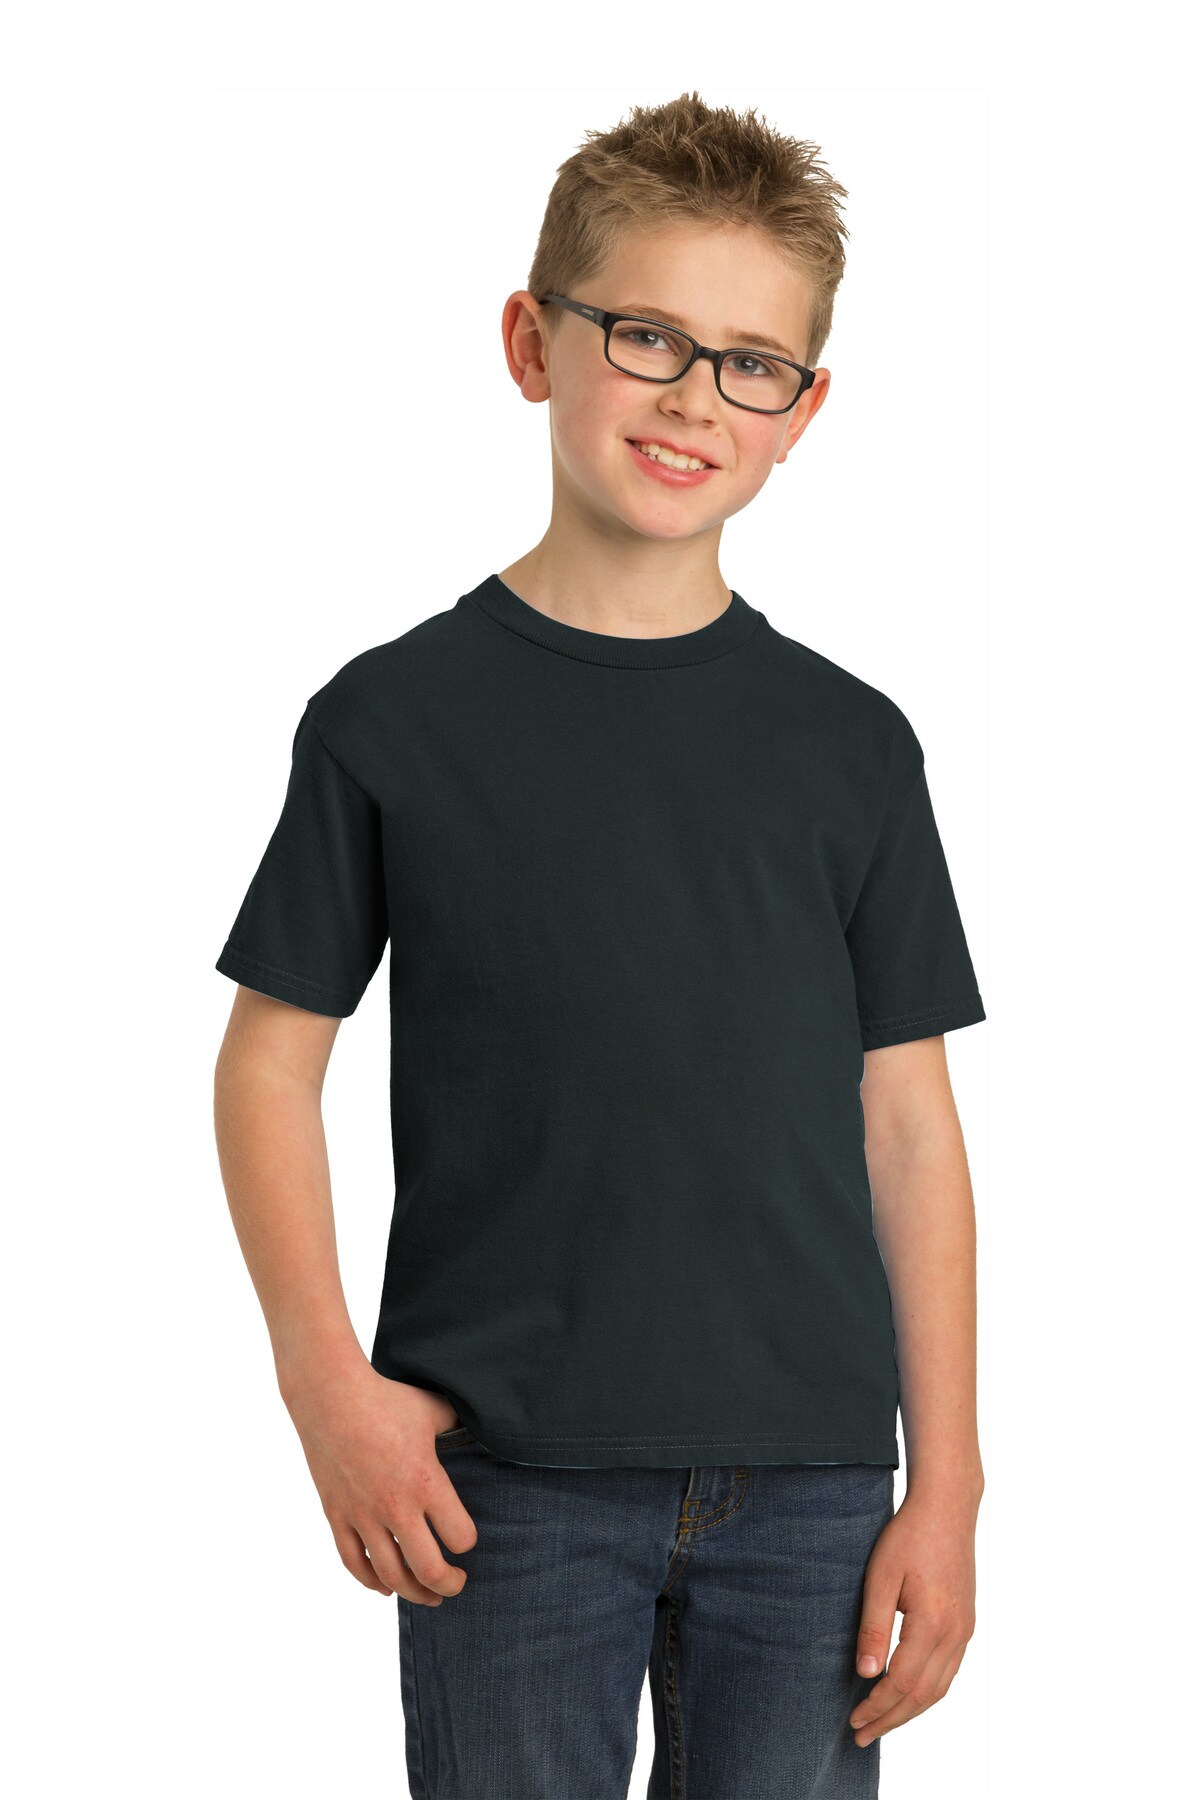 Short Sleeve T-Shirt for Youth | RADYAN®